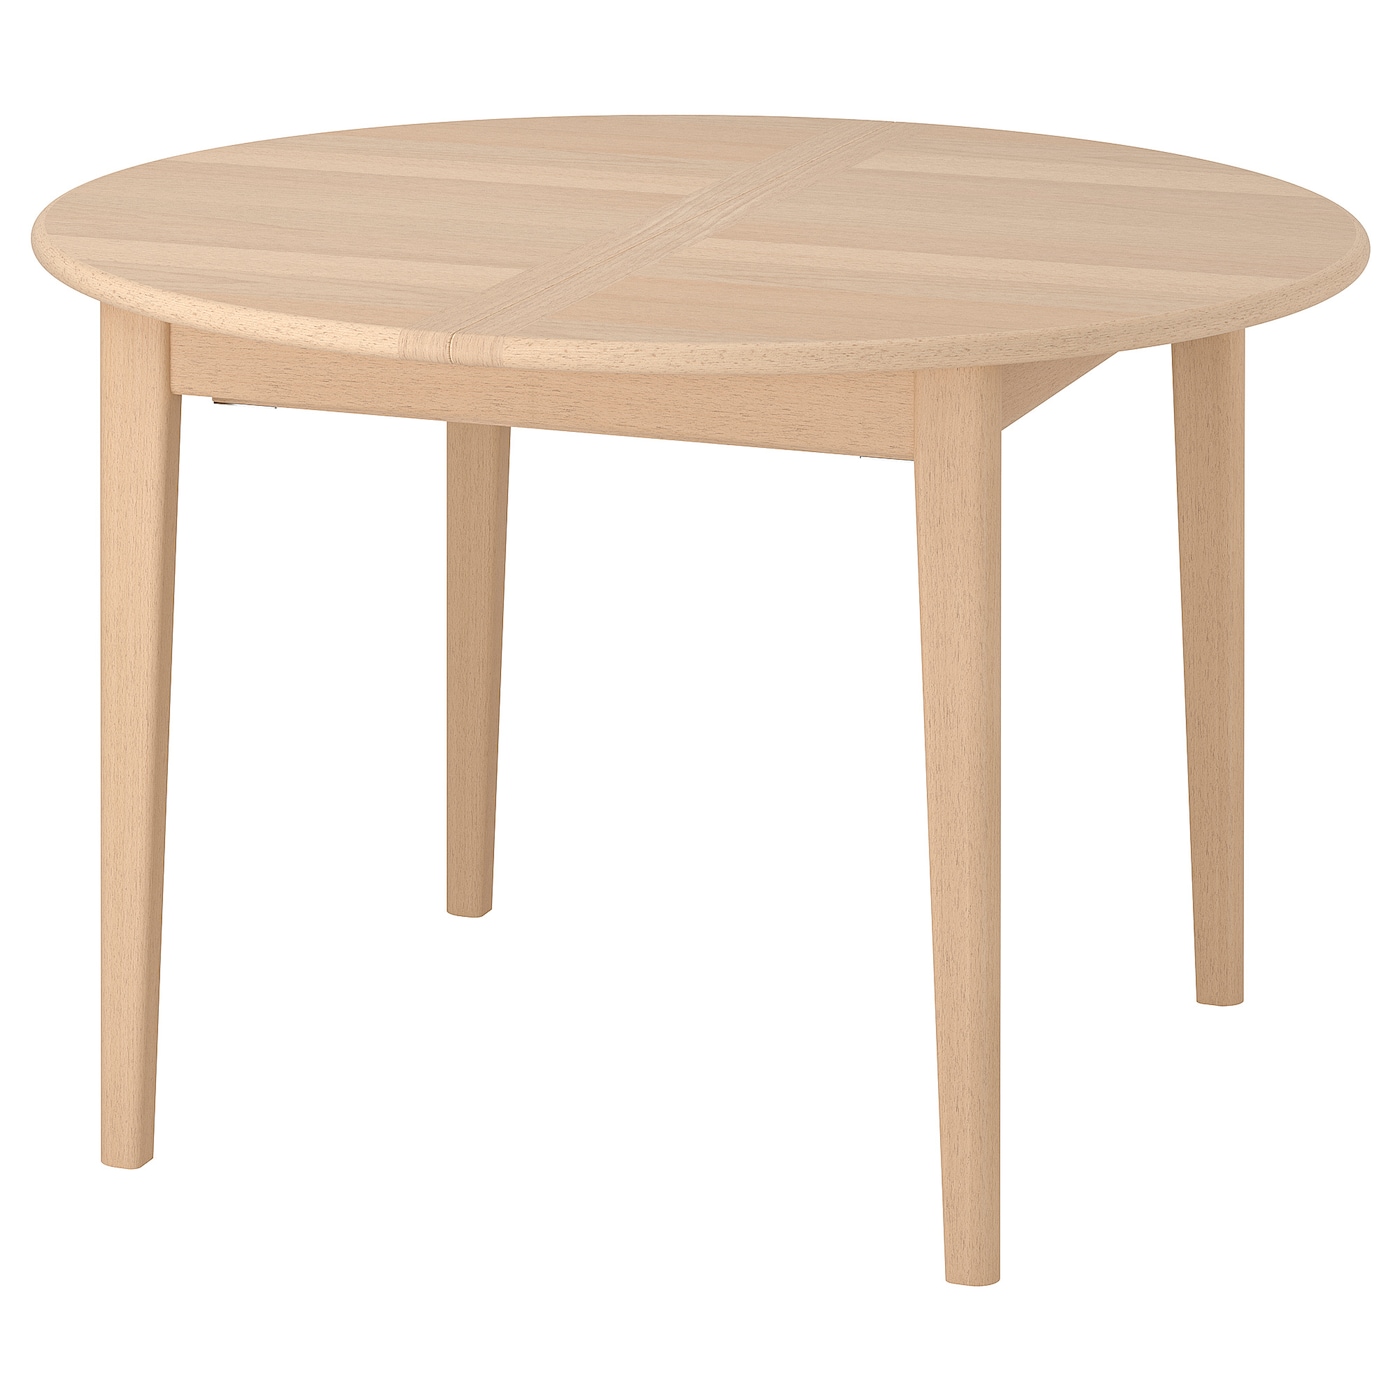 Раздвижной стол - IKEA SKANSNÄS/SKANSNAS, 75х115 см,  бежевый, СКАНСЭС ИКЕА